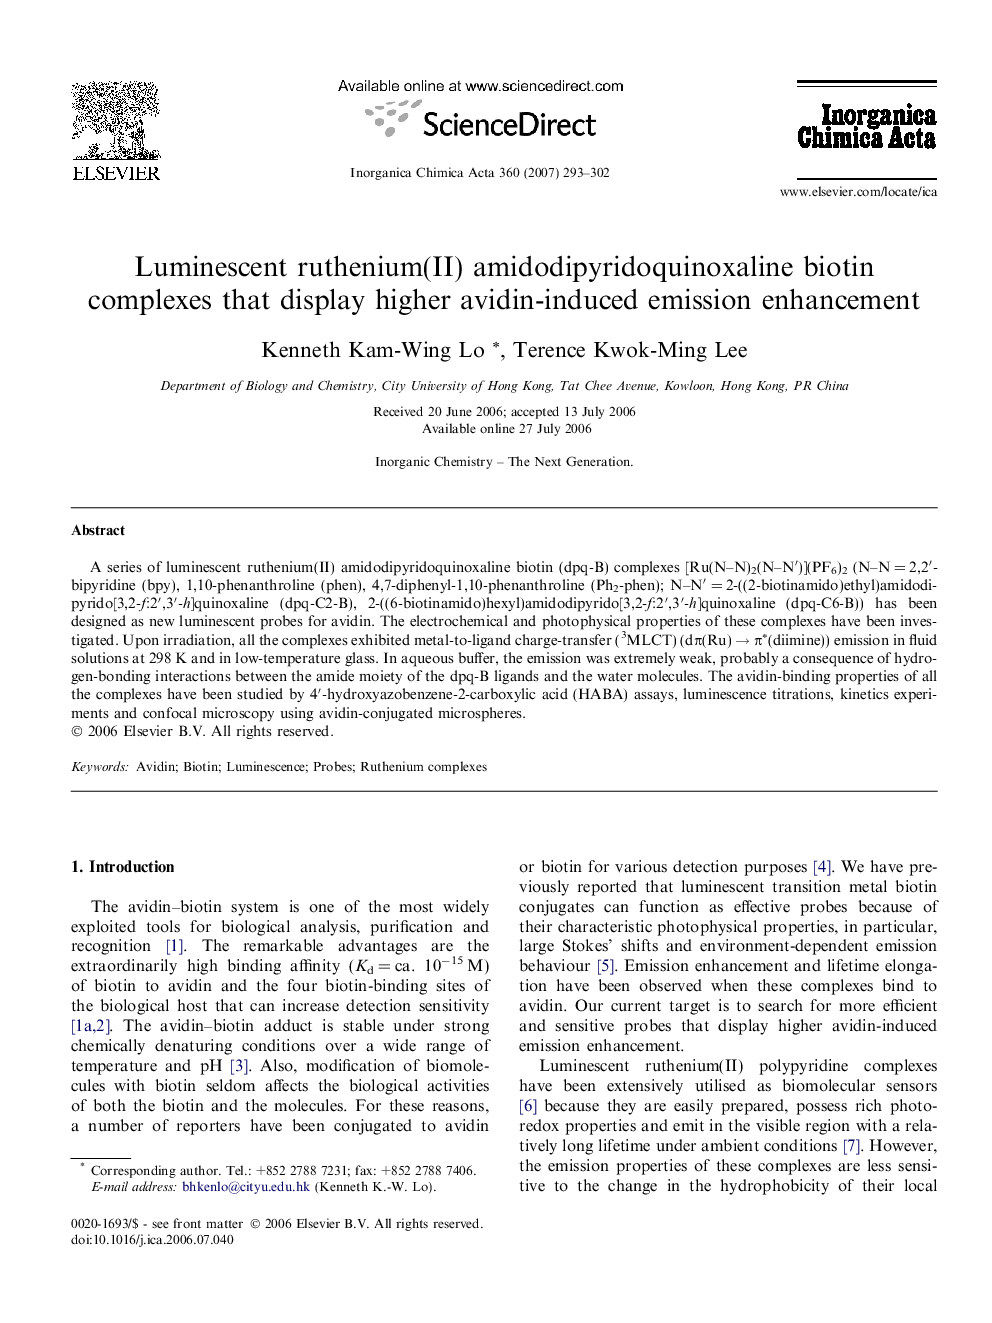 Luminescent ruthenium(II) amidodipyridoquinoxaline biotin complexes that display higher avidin-induced emission enhancement